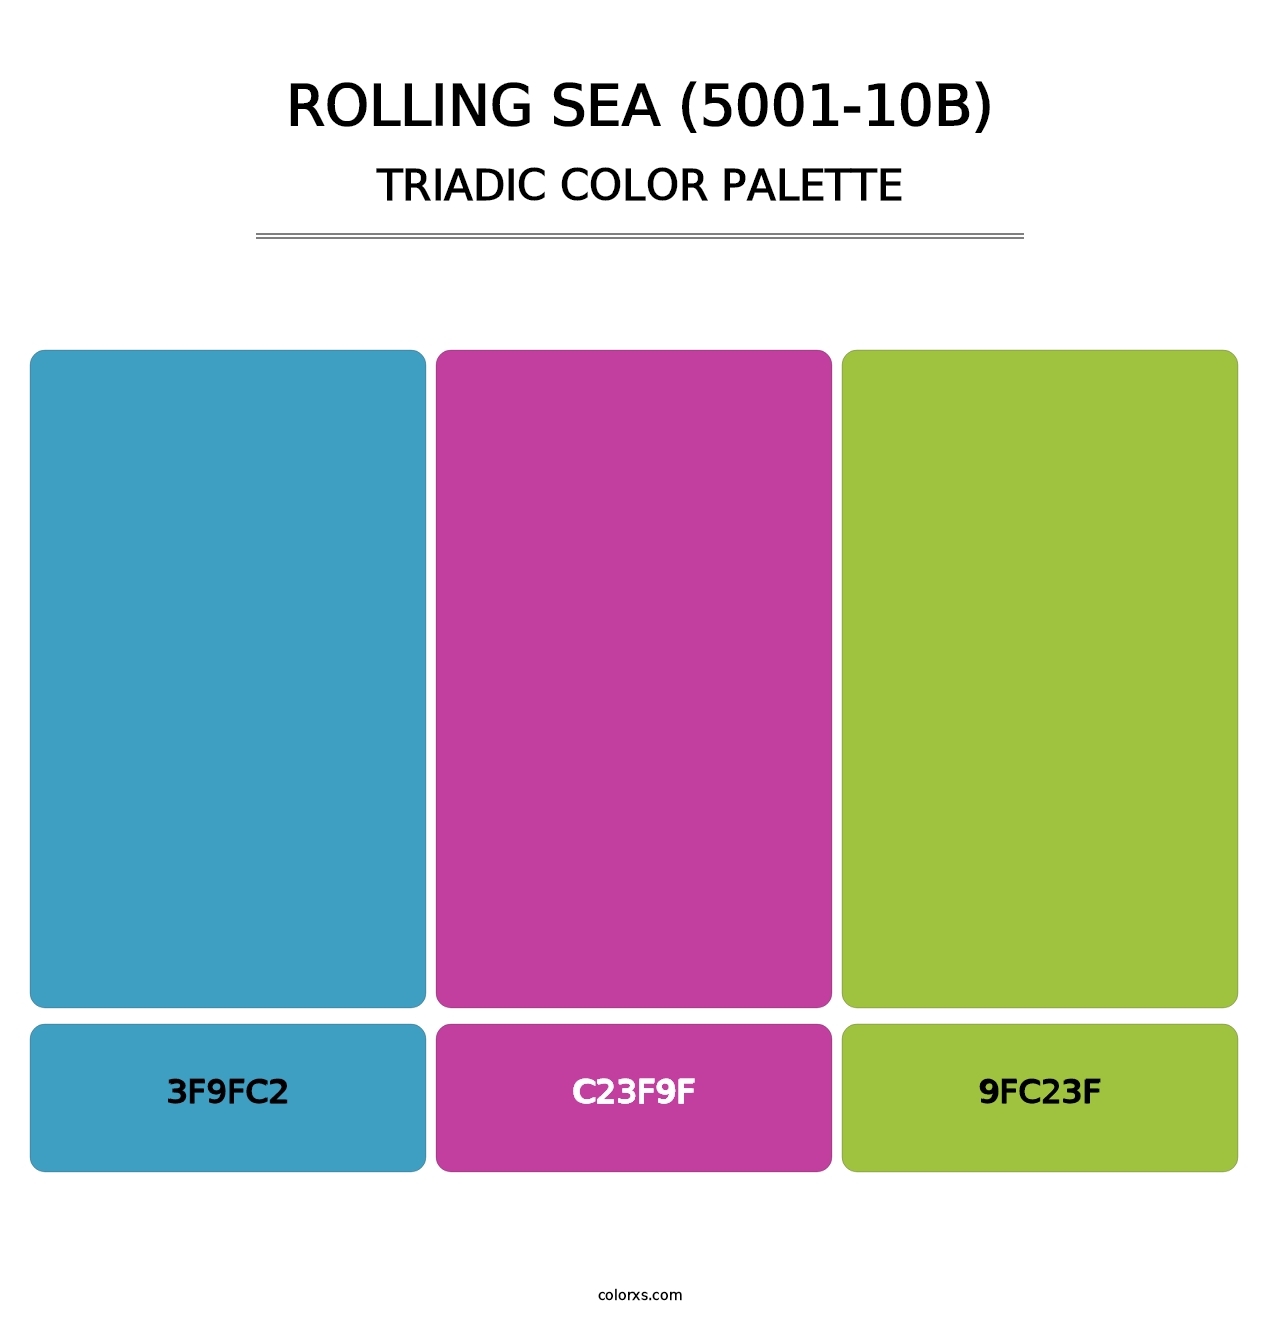 Rolling Sea (5001-10B) - Triadic Color Palette